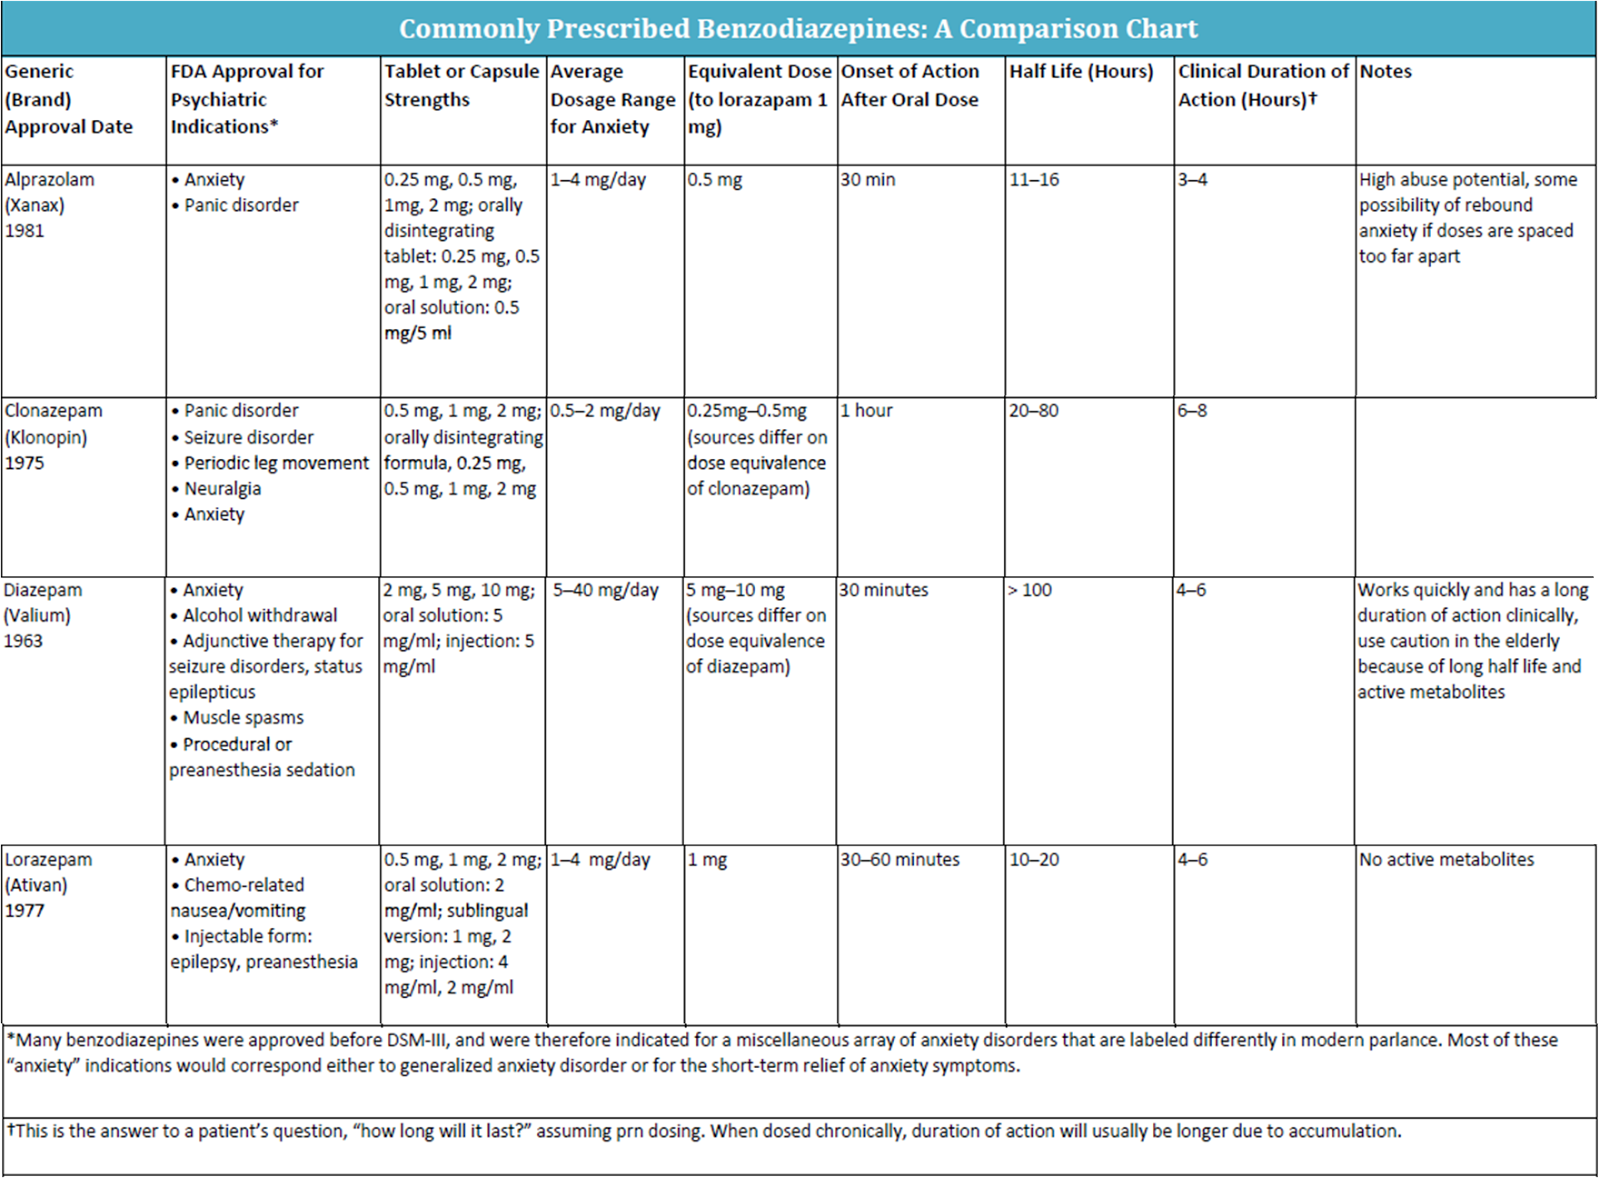 ativan drug schedule classification guide